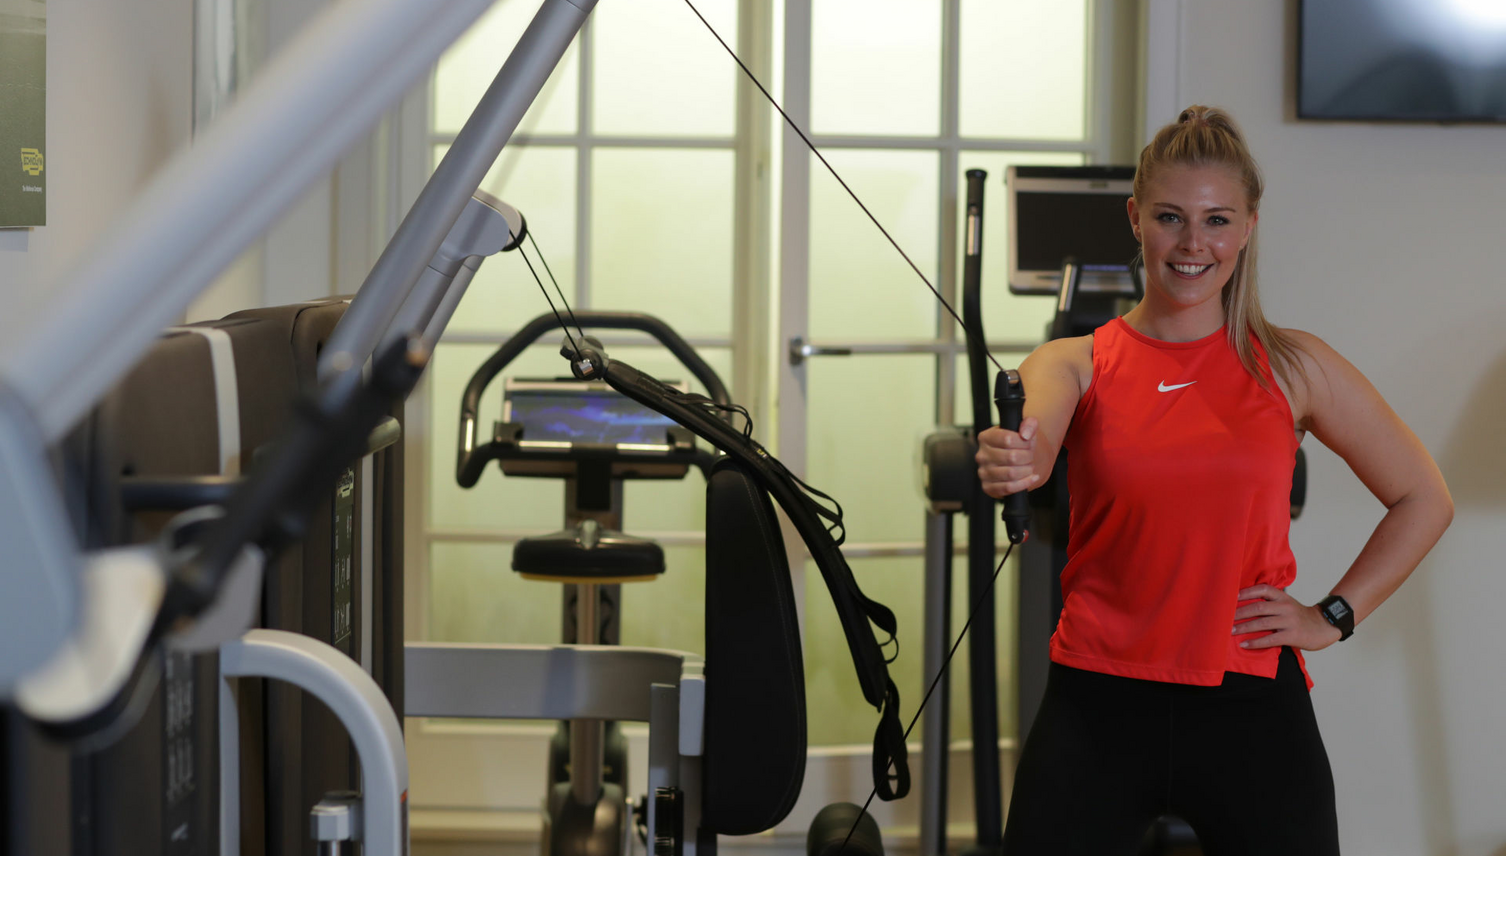 Frau trainiert am Gerät im Fitnessraum